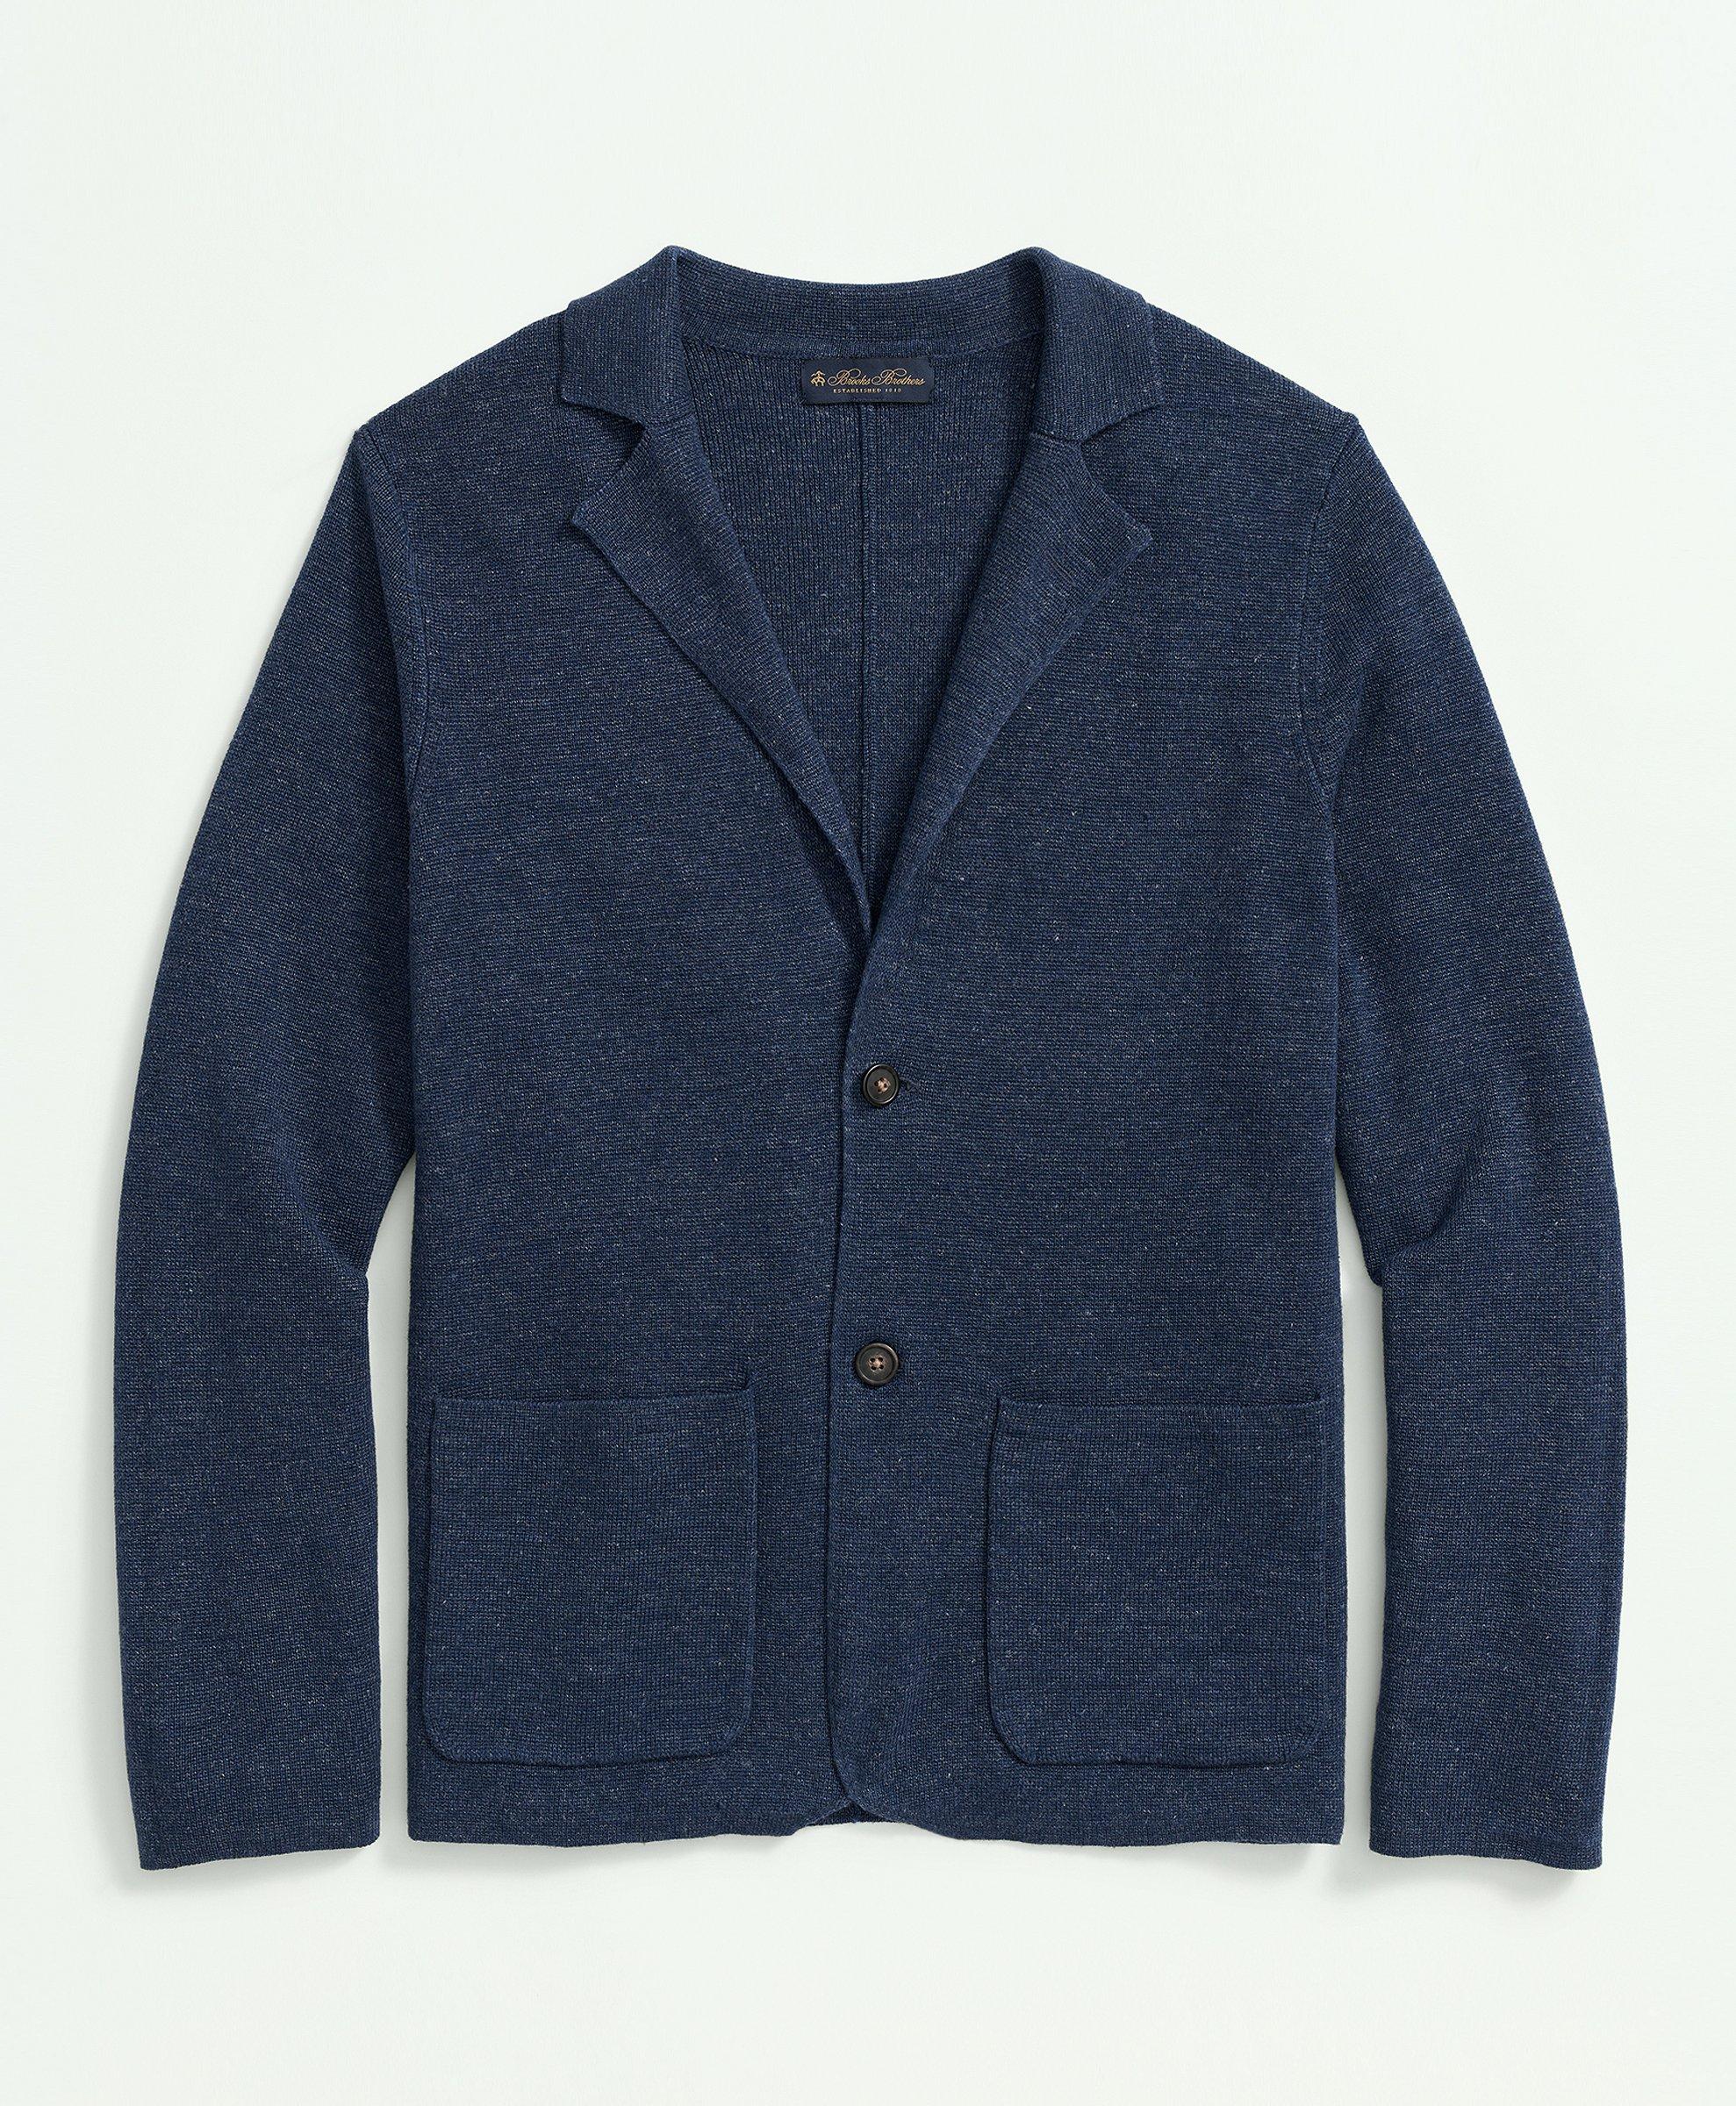 Shop Men's Sweaters: Crew, V-Neck & Cardigan | Brooks Brothers